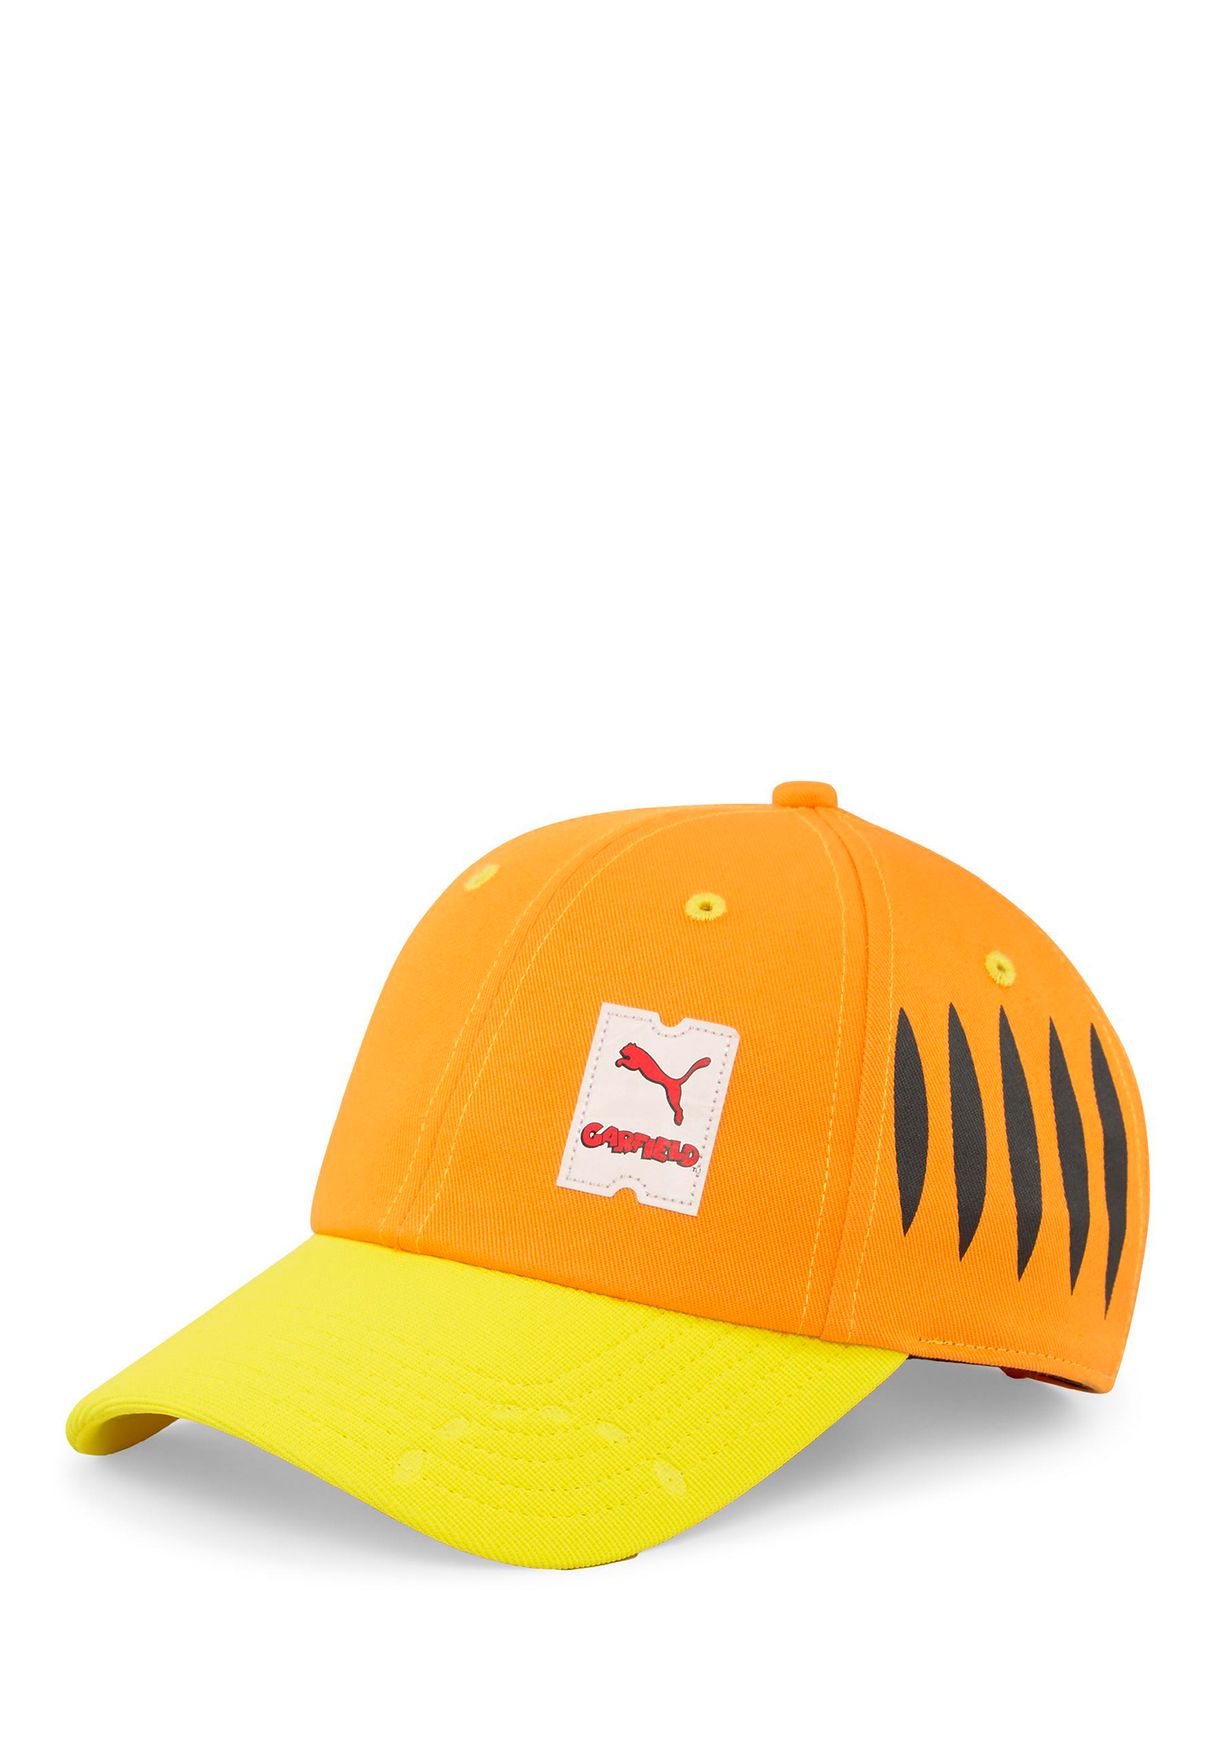 Garfield Baseball Cap